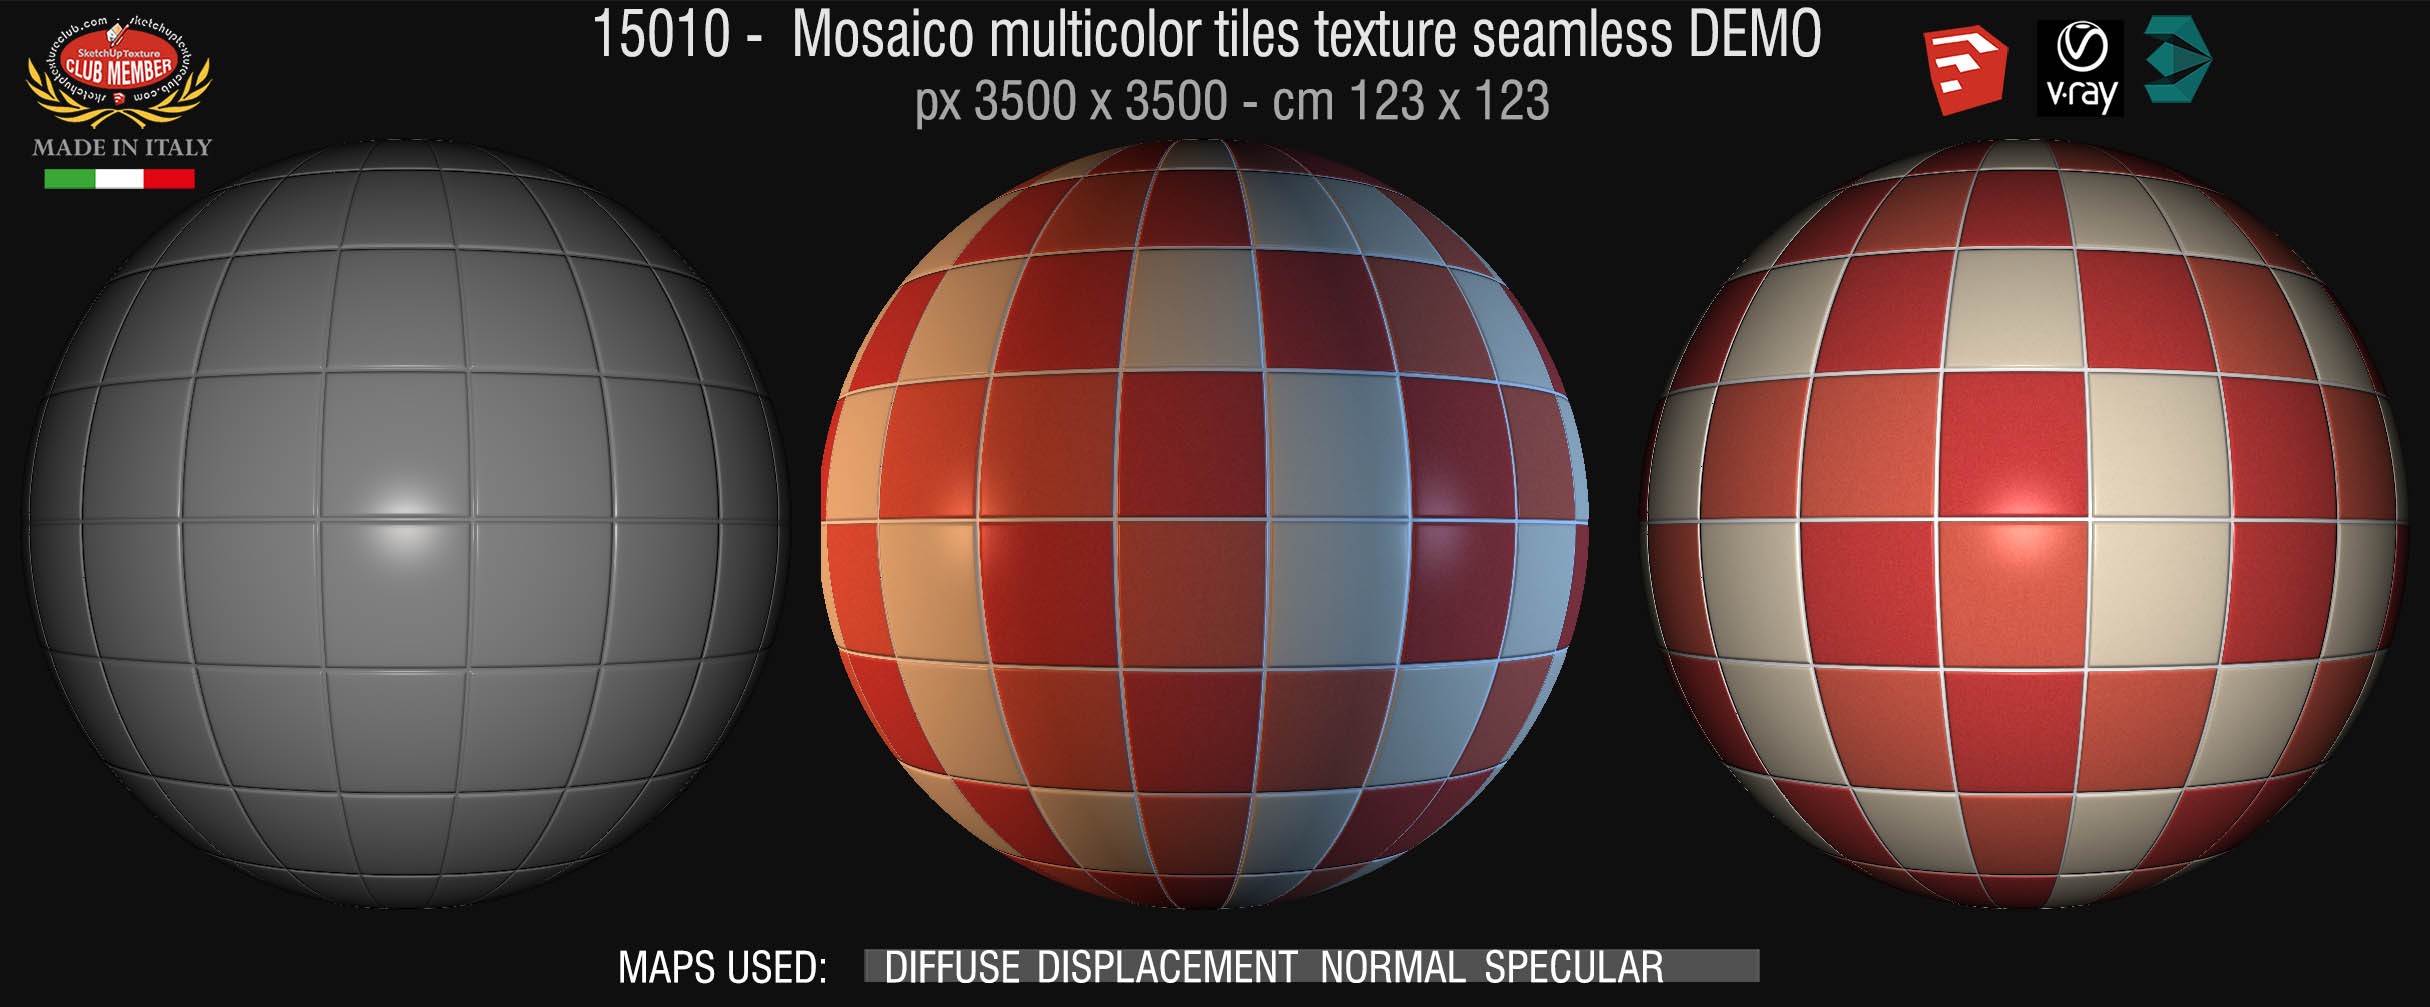 15010 Mosaico multicolor tiles texture seamless + maps DEMO